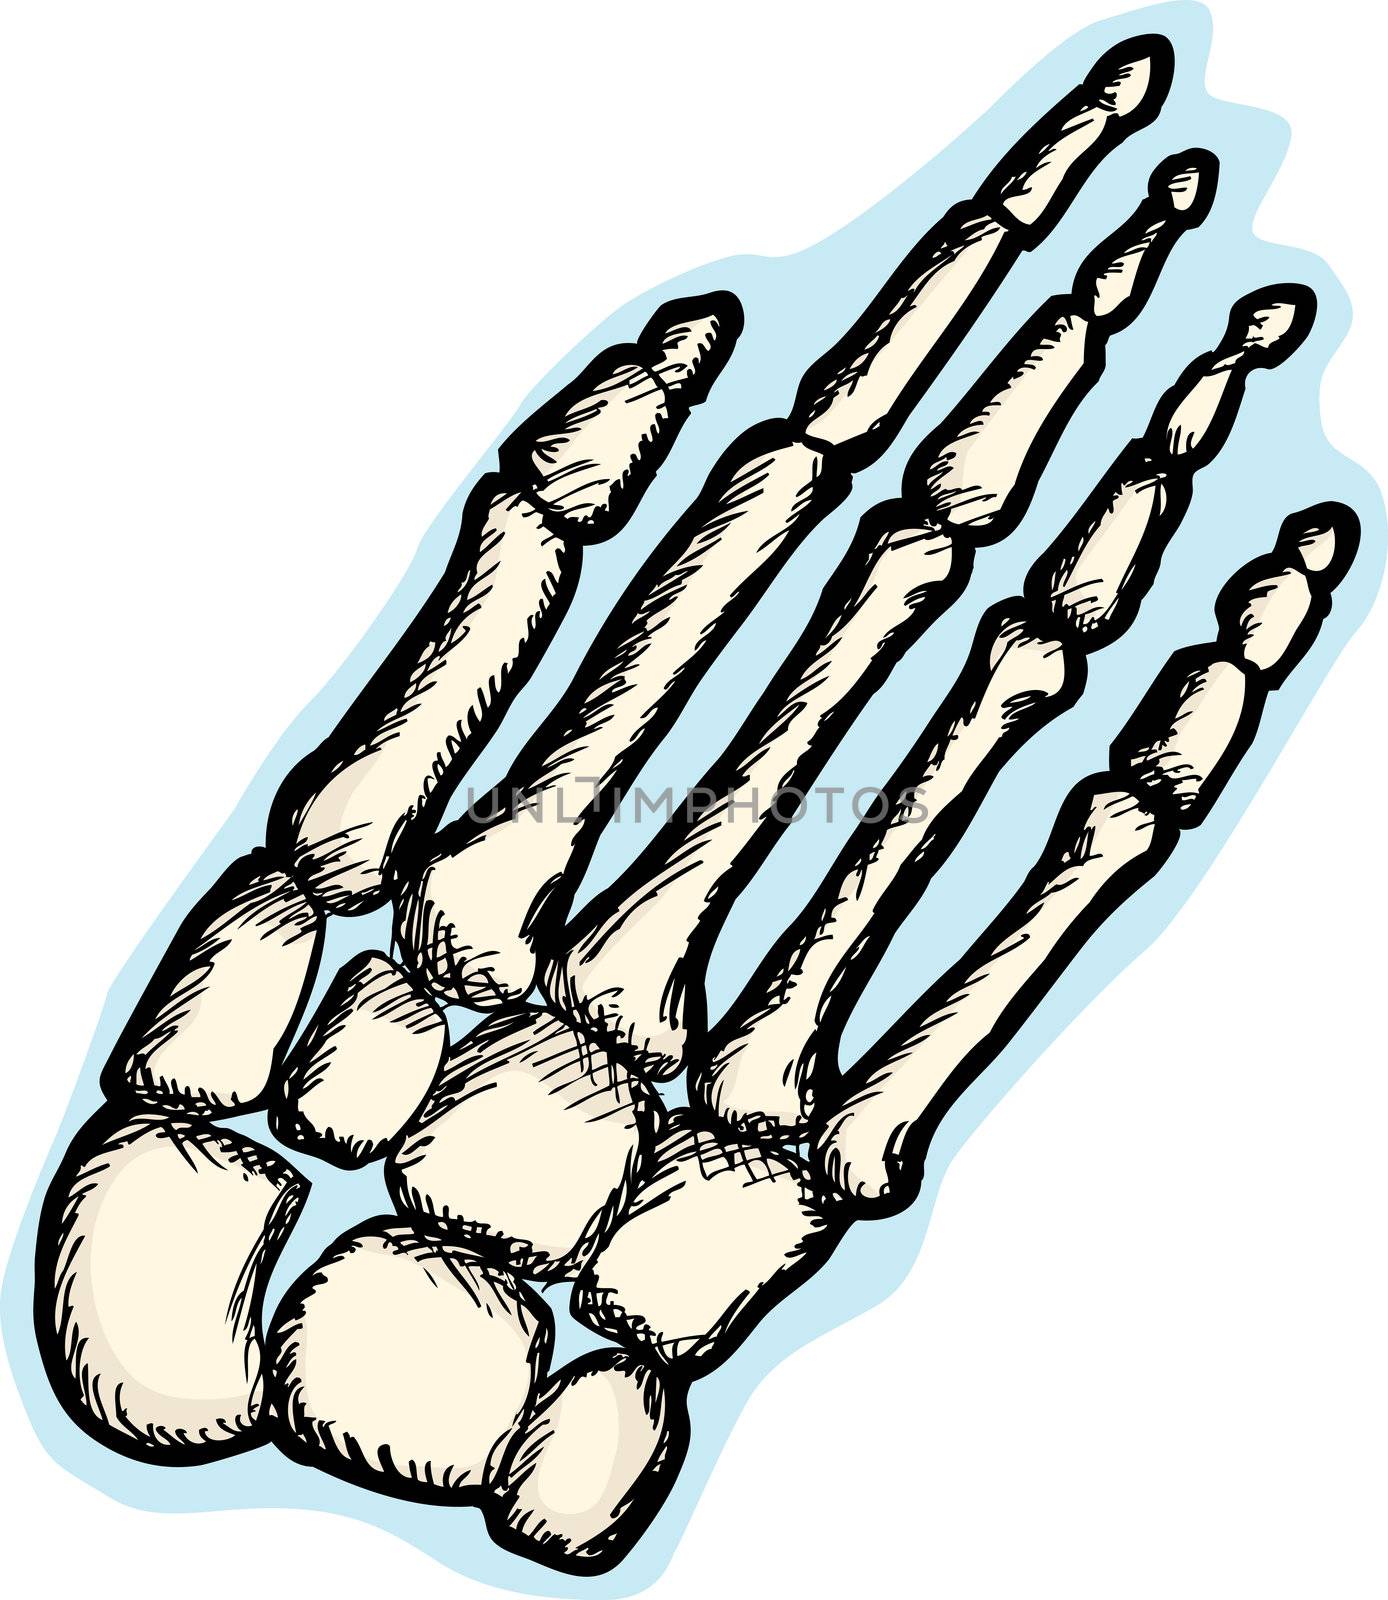 Human Hand Bones by TheBlackRhino